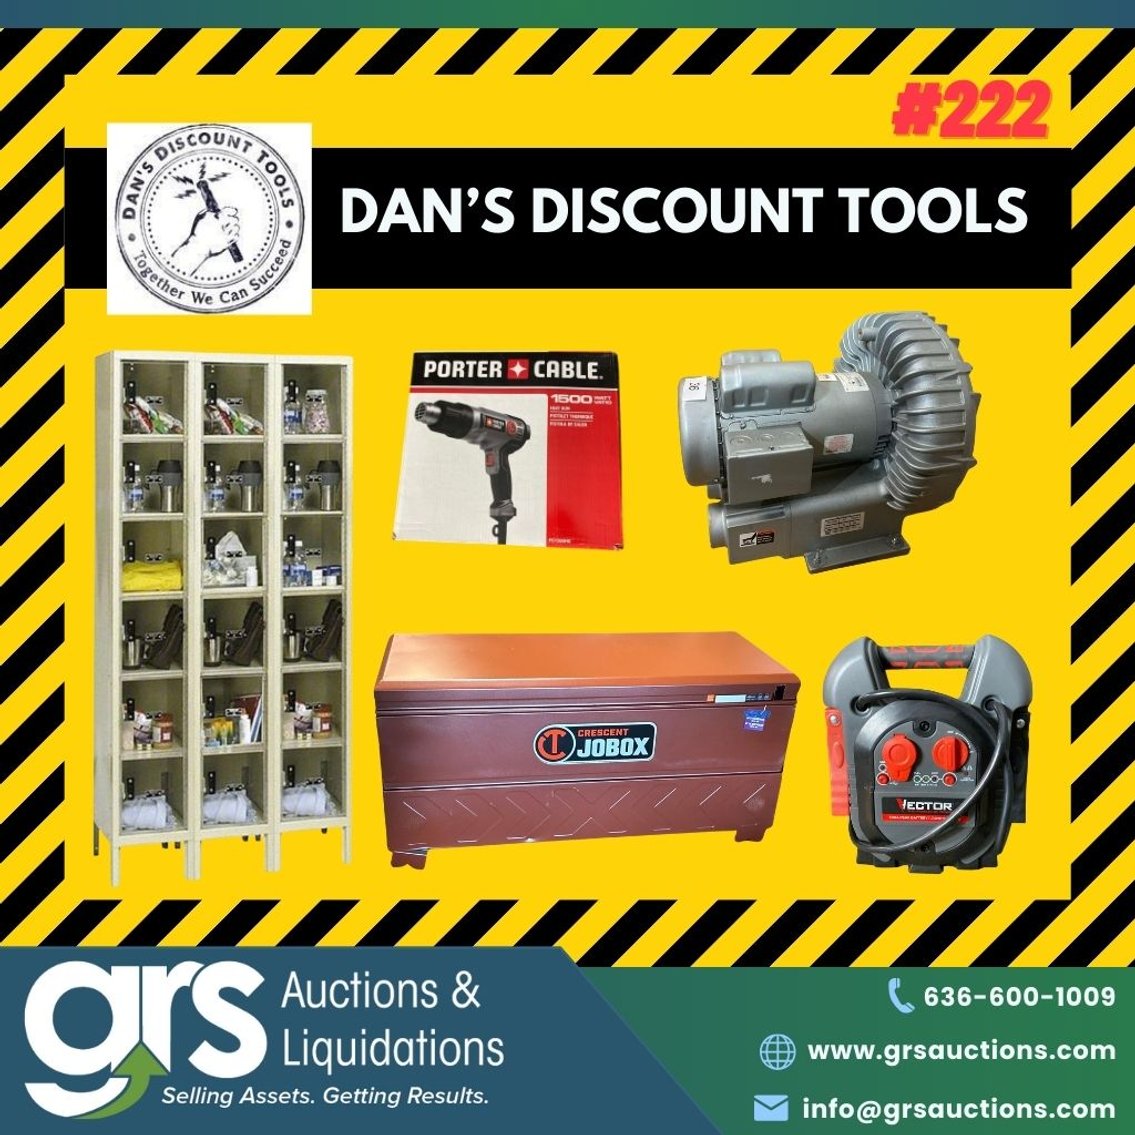 Dan's Discount Tools #222